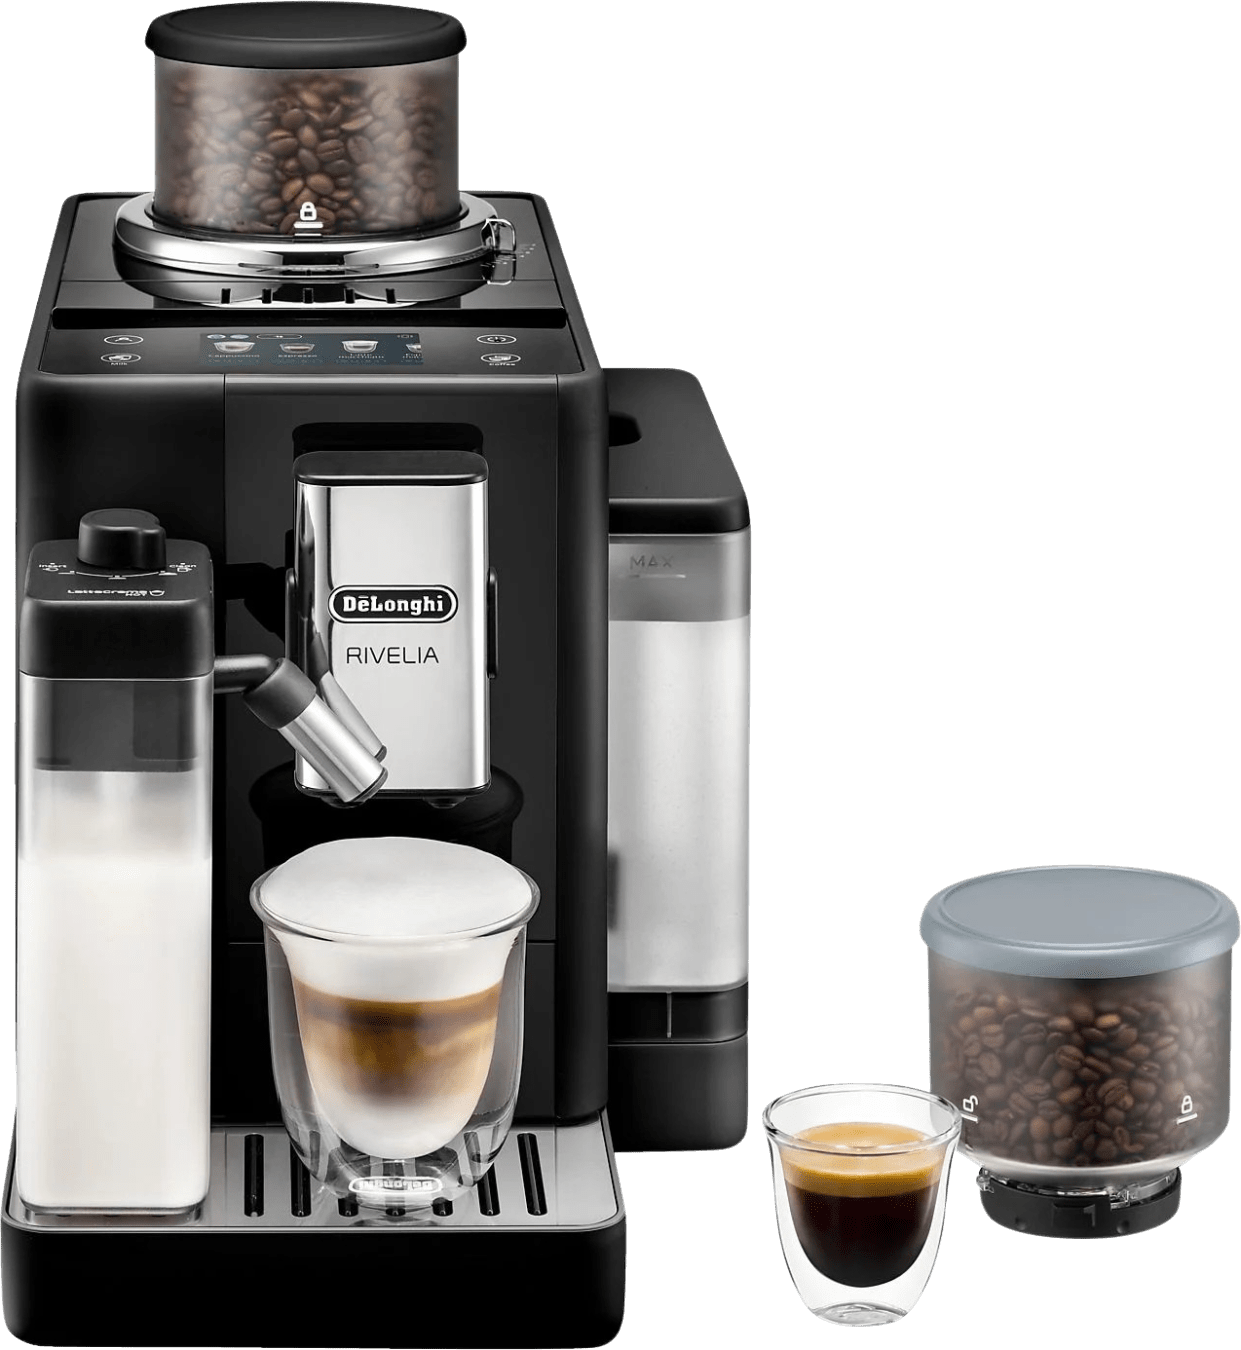 Delonghi Rivelia EXAM 440.55 Coffee Machine